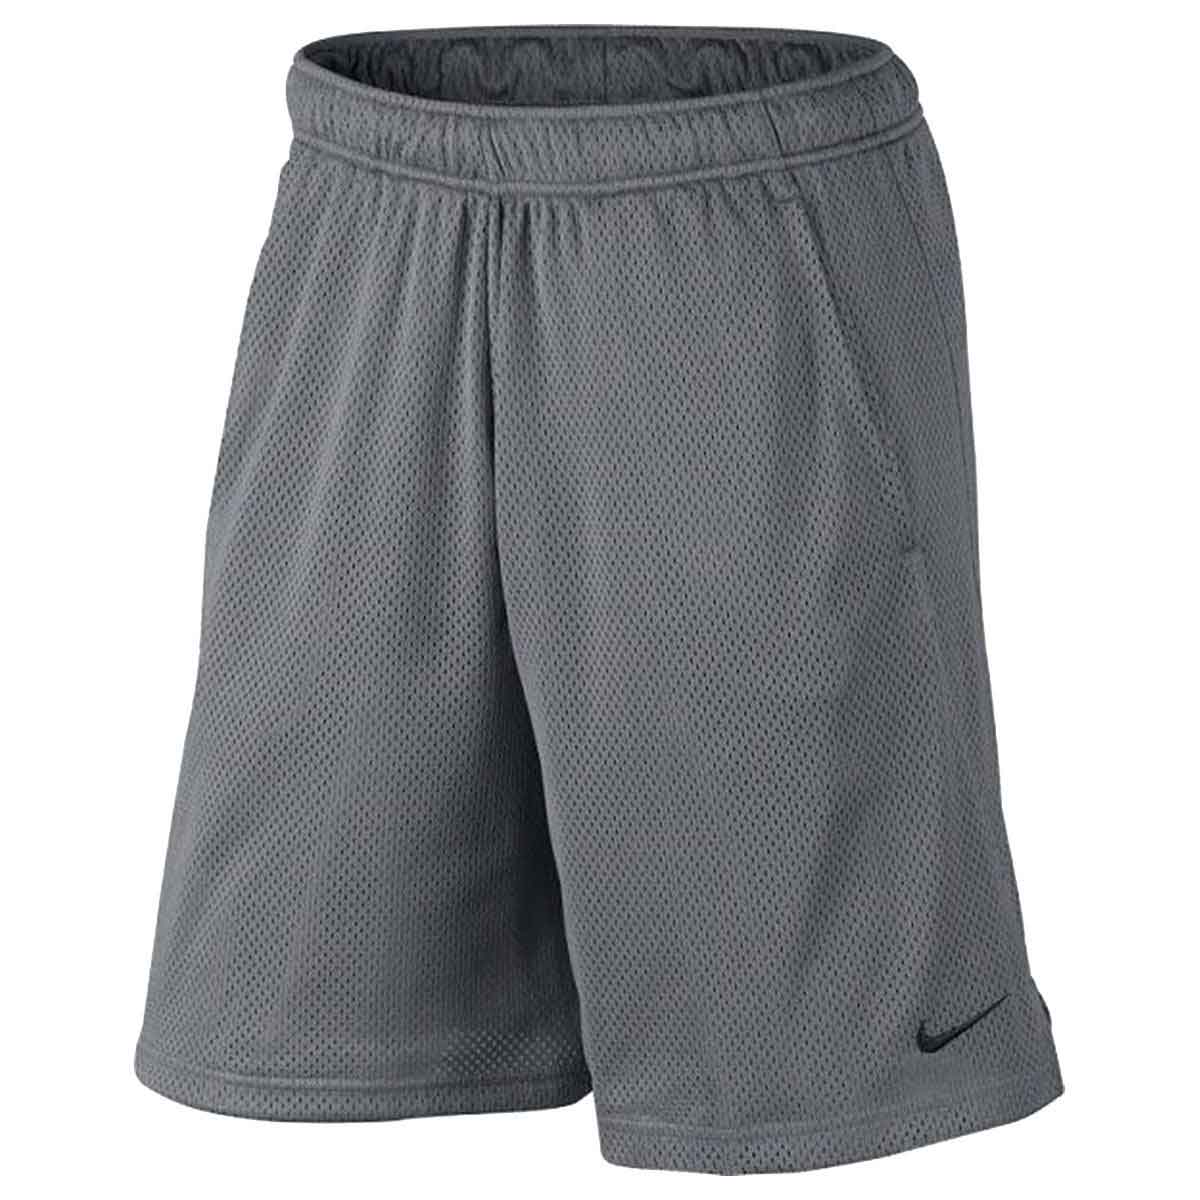 Buy Nike Dri-Fit Mesh Training Shorts (Grey) Online India|Nike Men Clothing